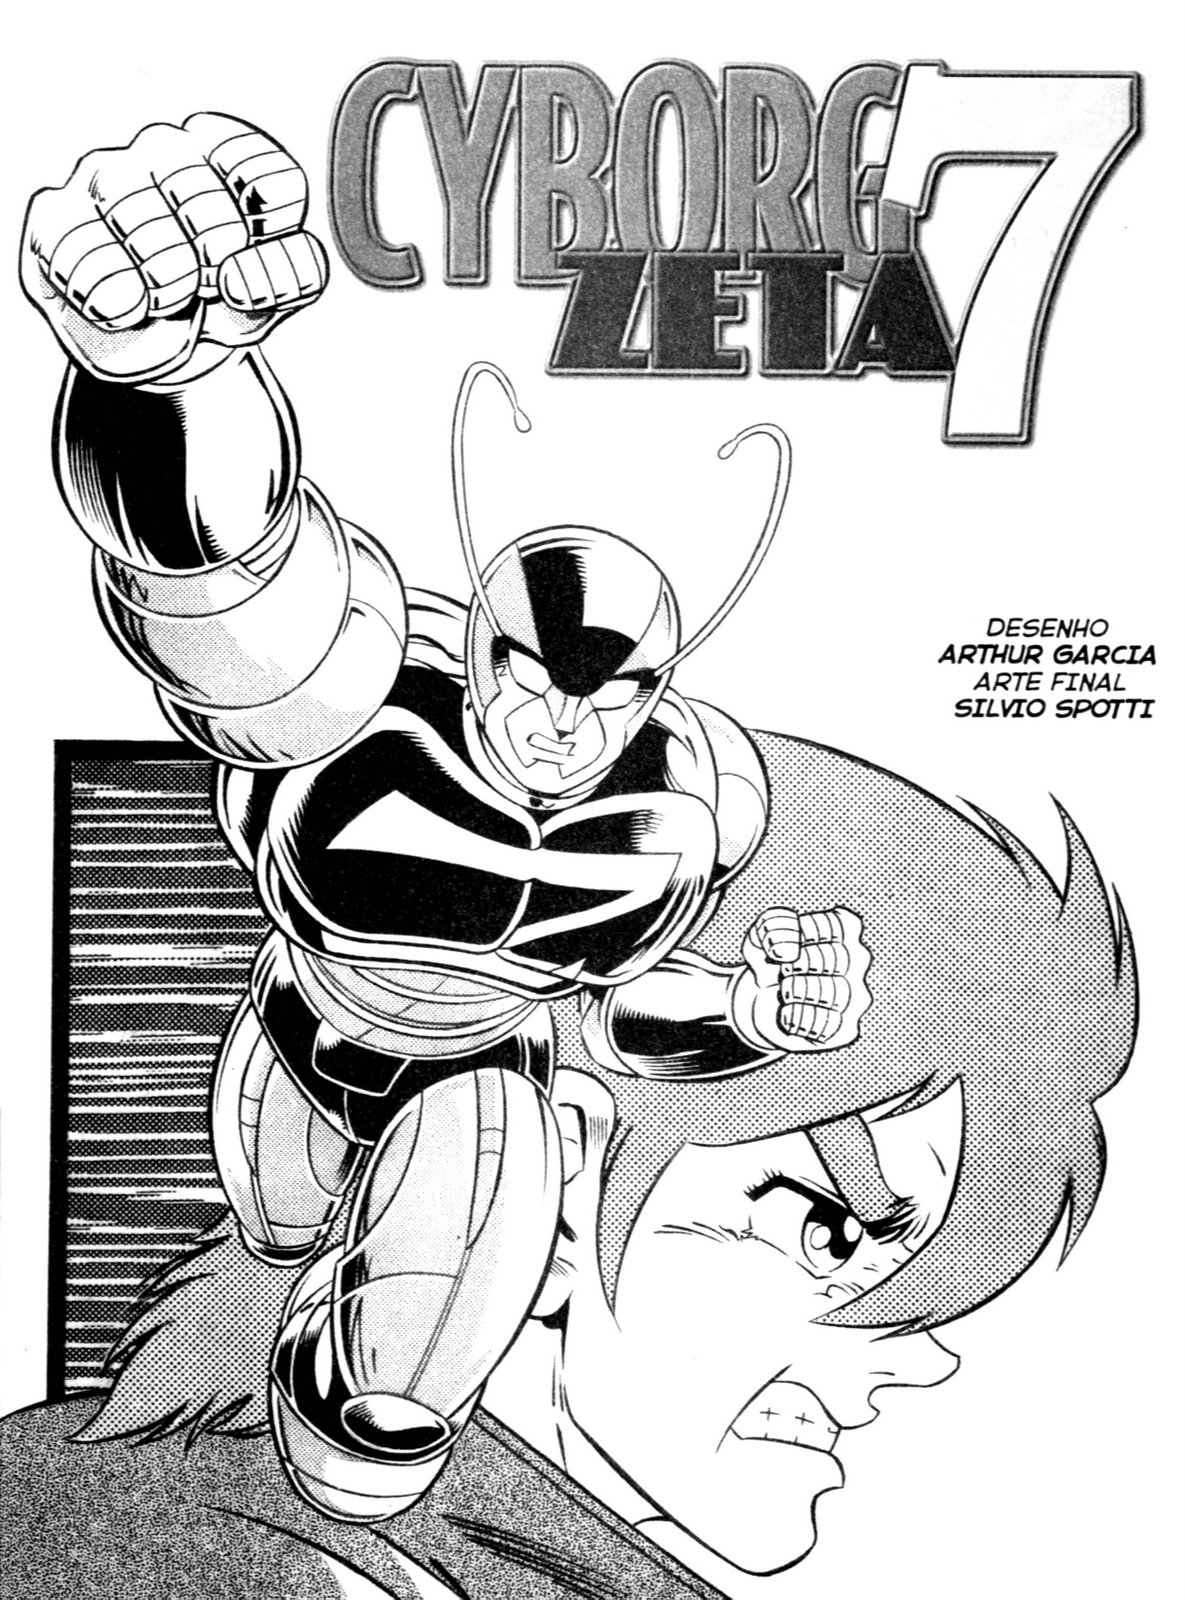 Cyborg Zeta 7